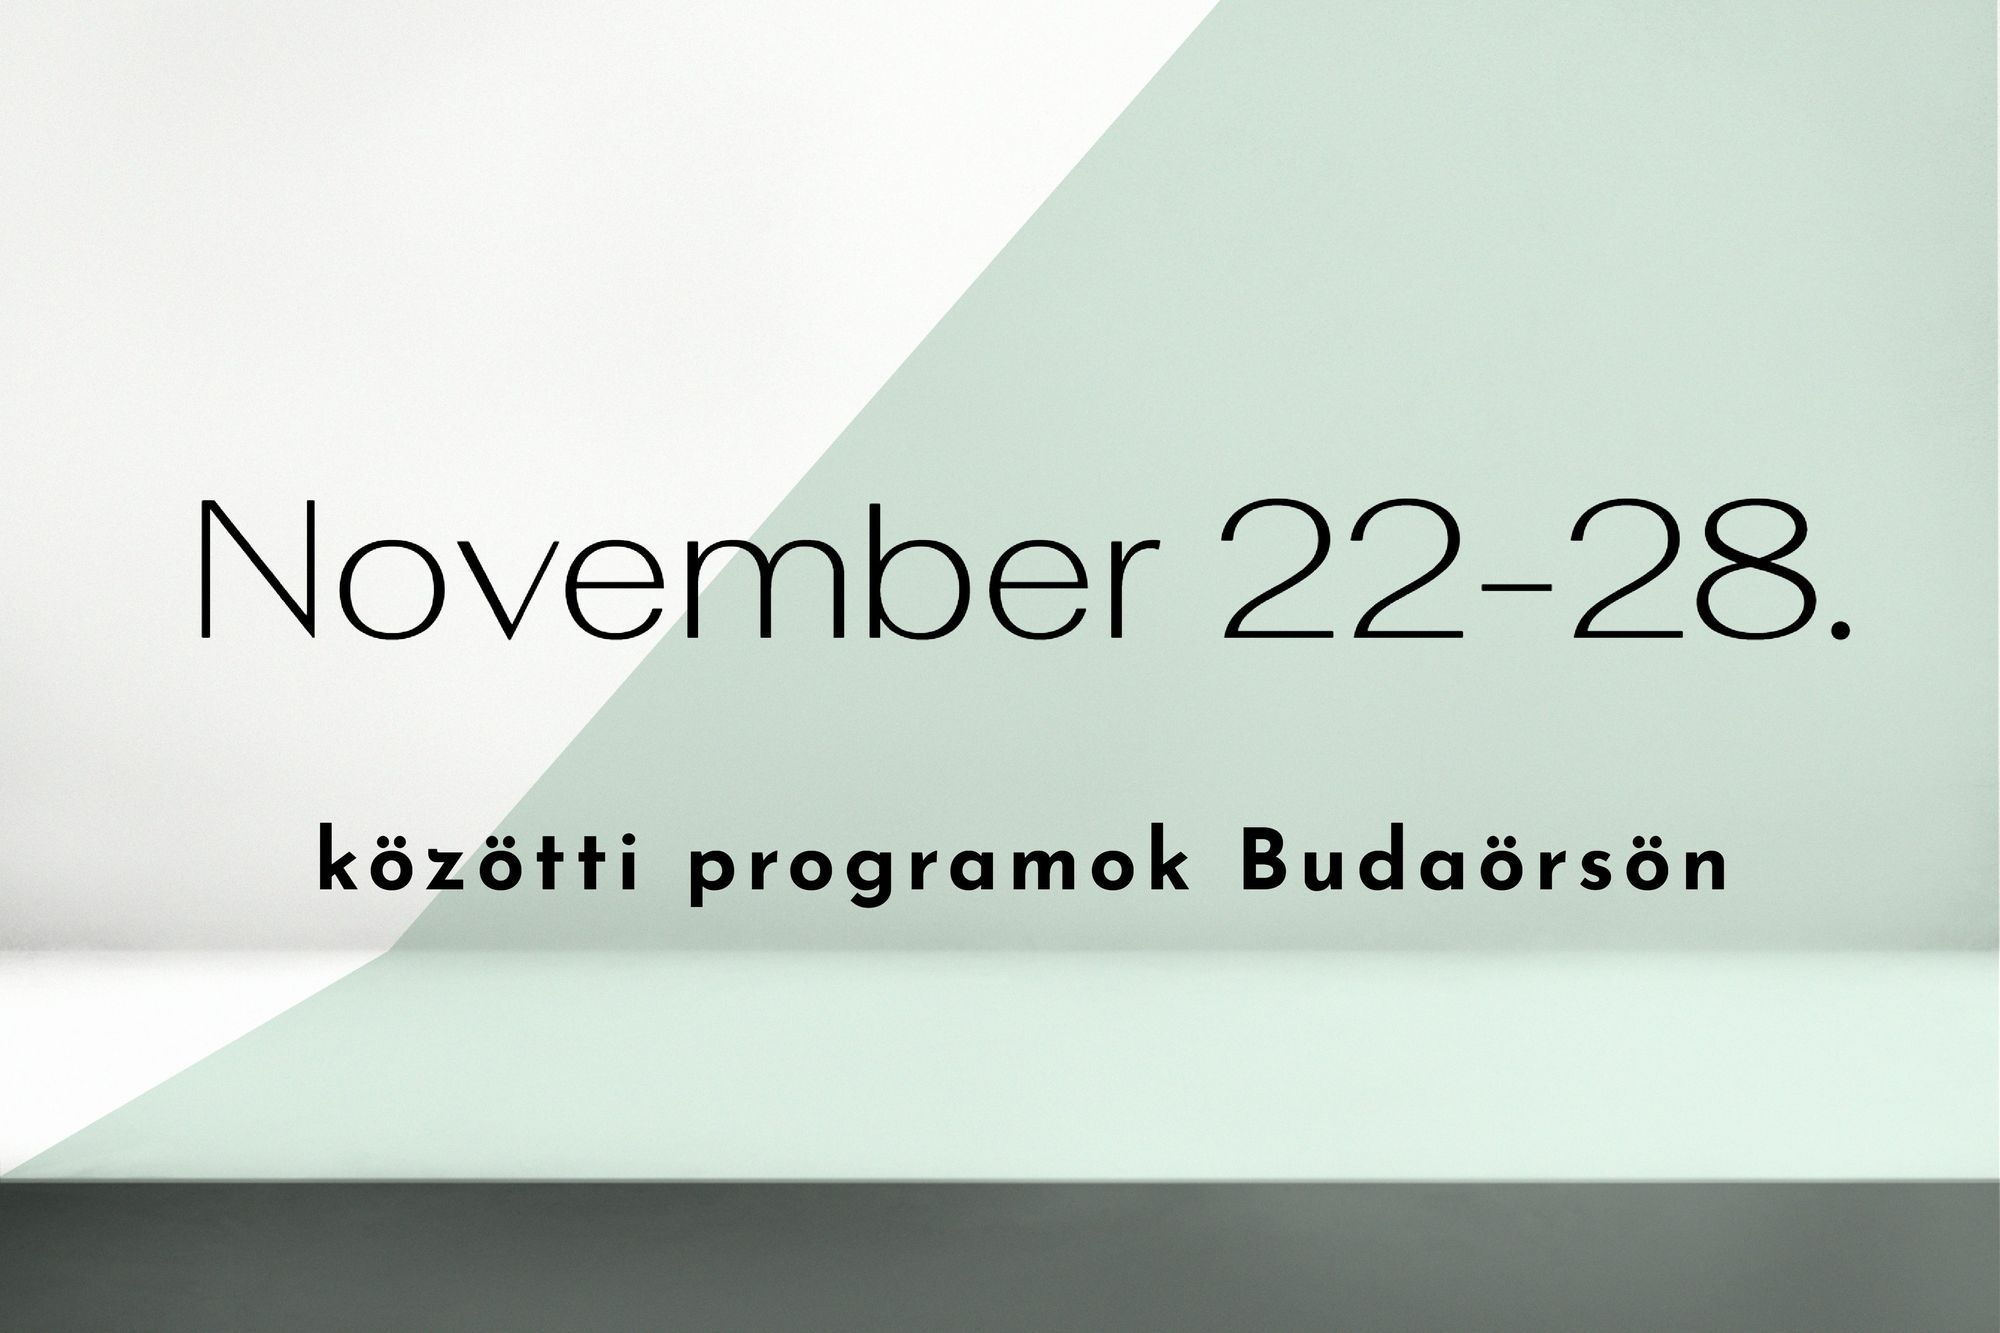 November 22-28. közötti programok Budaörsön